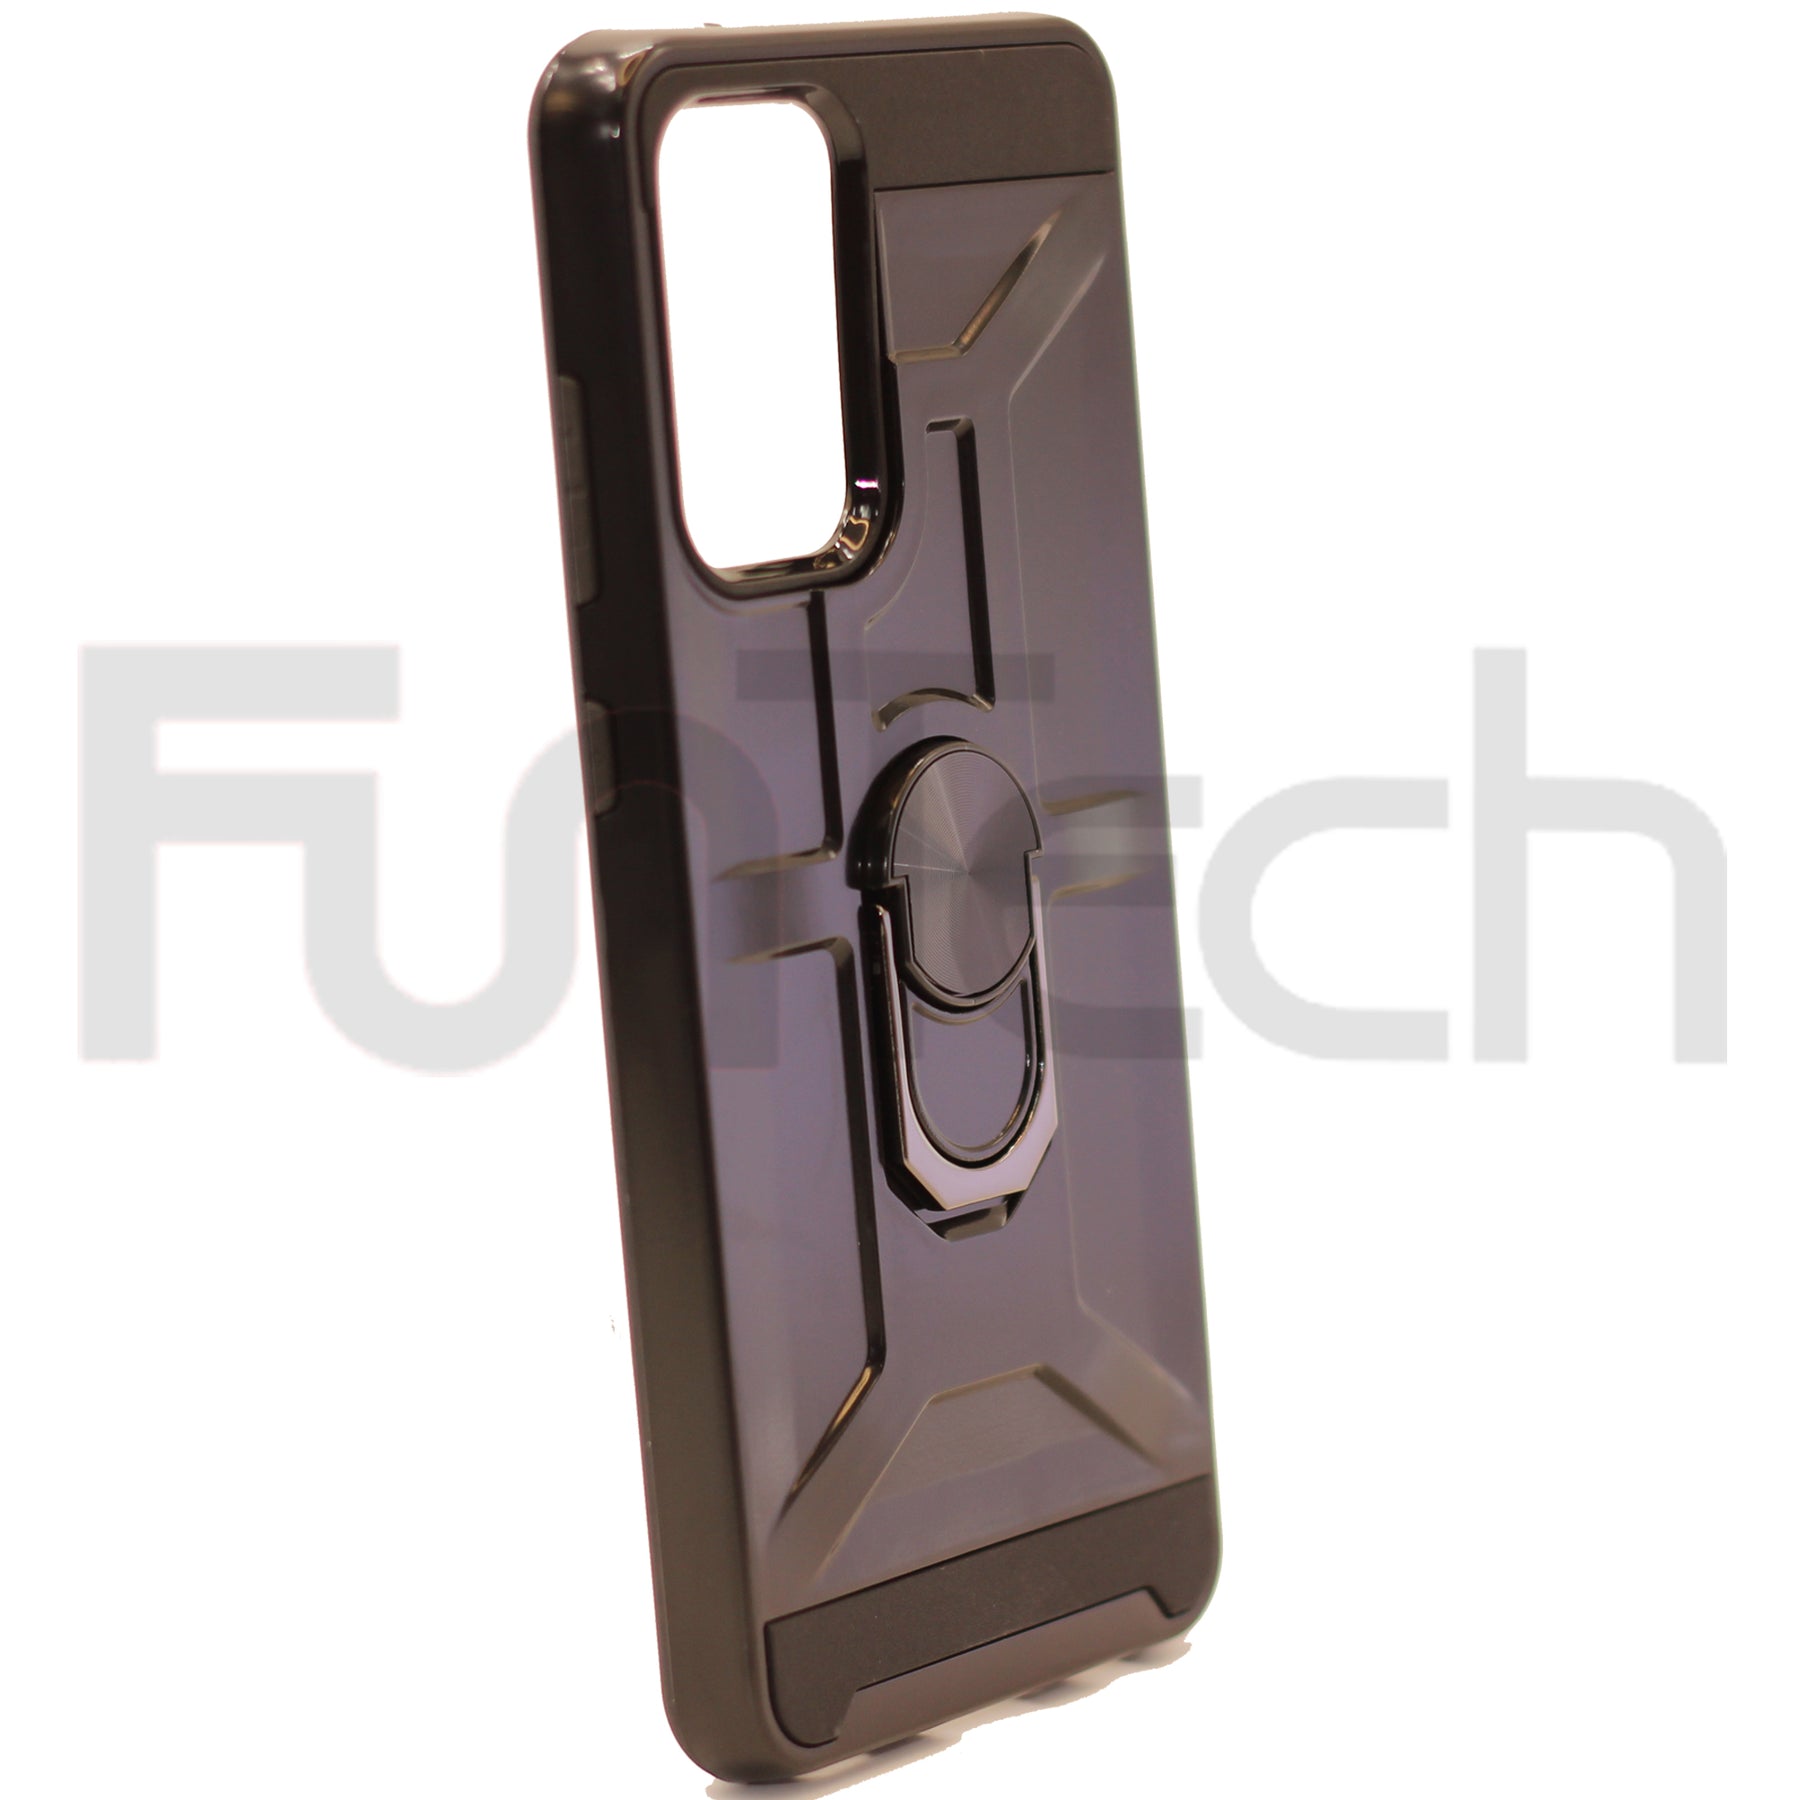 Samsung A72 5G, Ring Armor Case, Color Black.